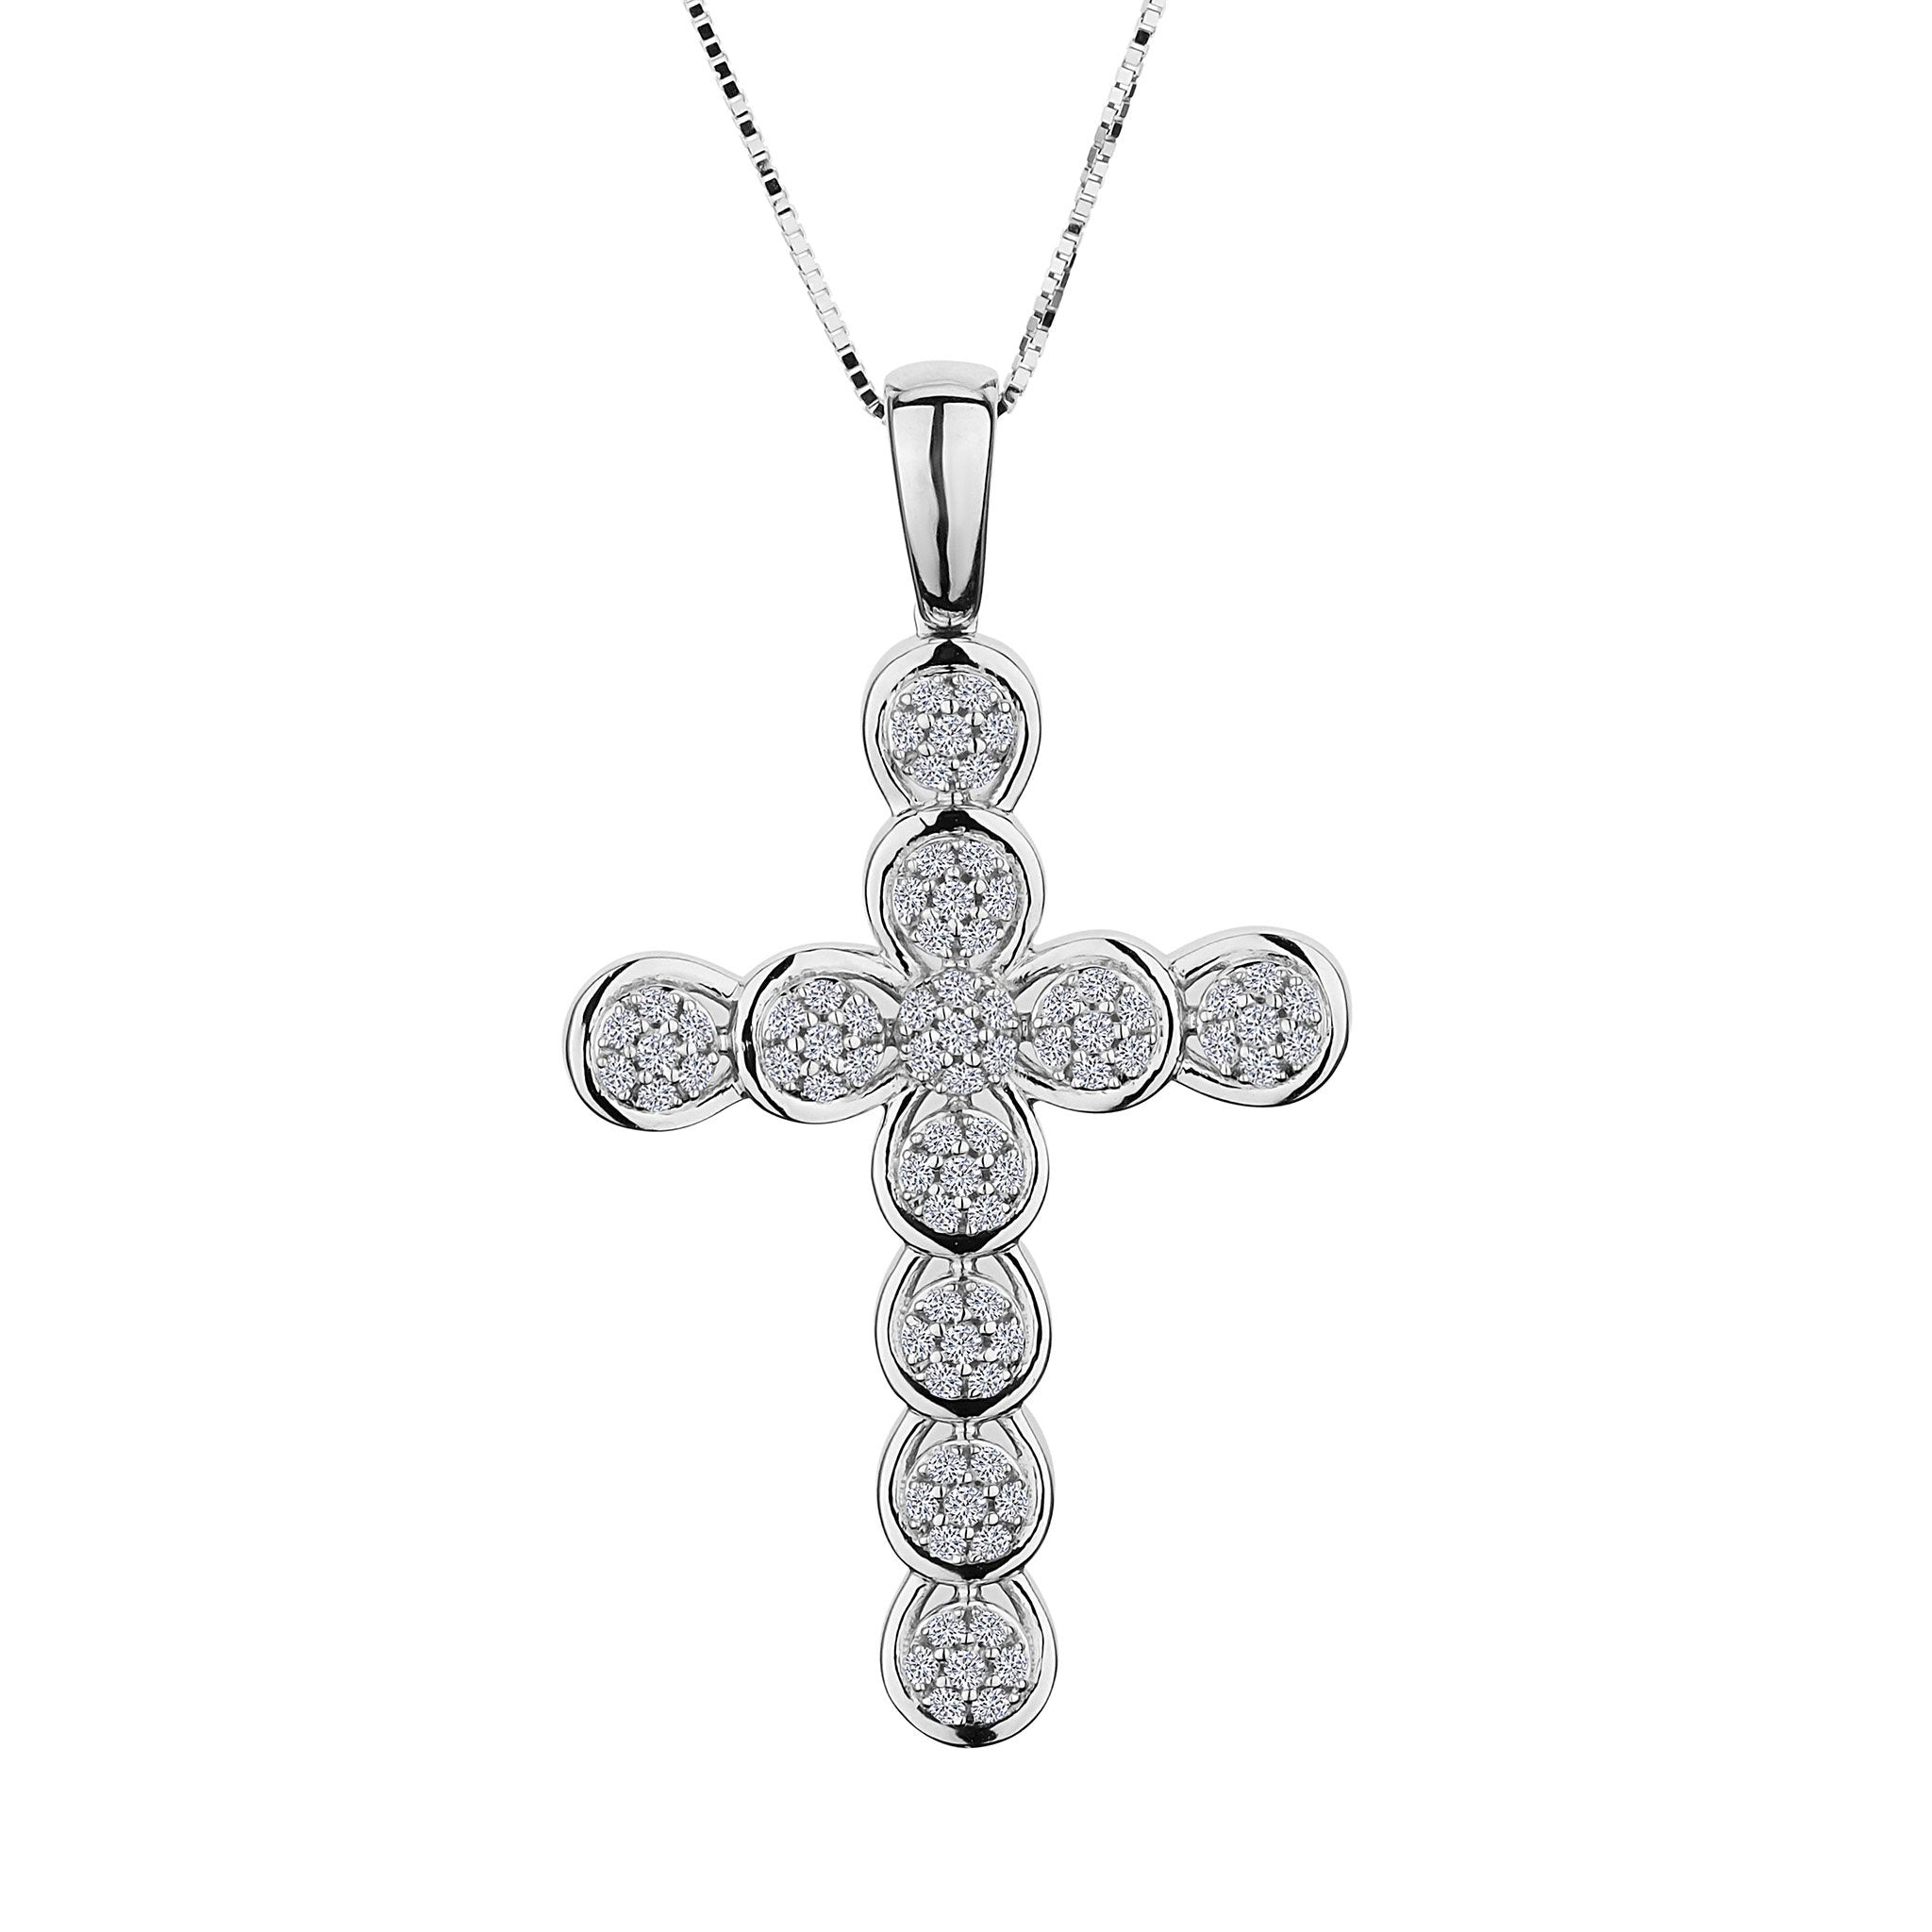 .25 Carat Diamond Pave Cross Pendant,  10kt White Gold. Necklaces and Pendants. Griffin Jewellery Designs.